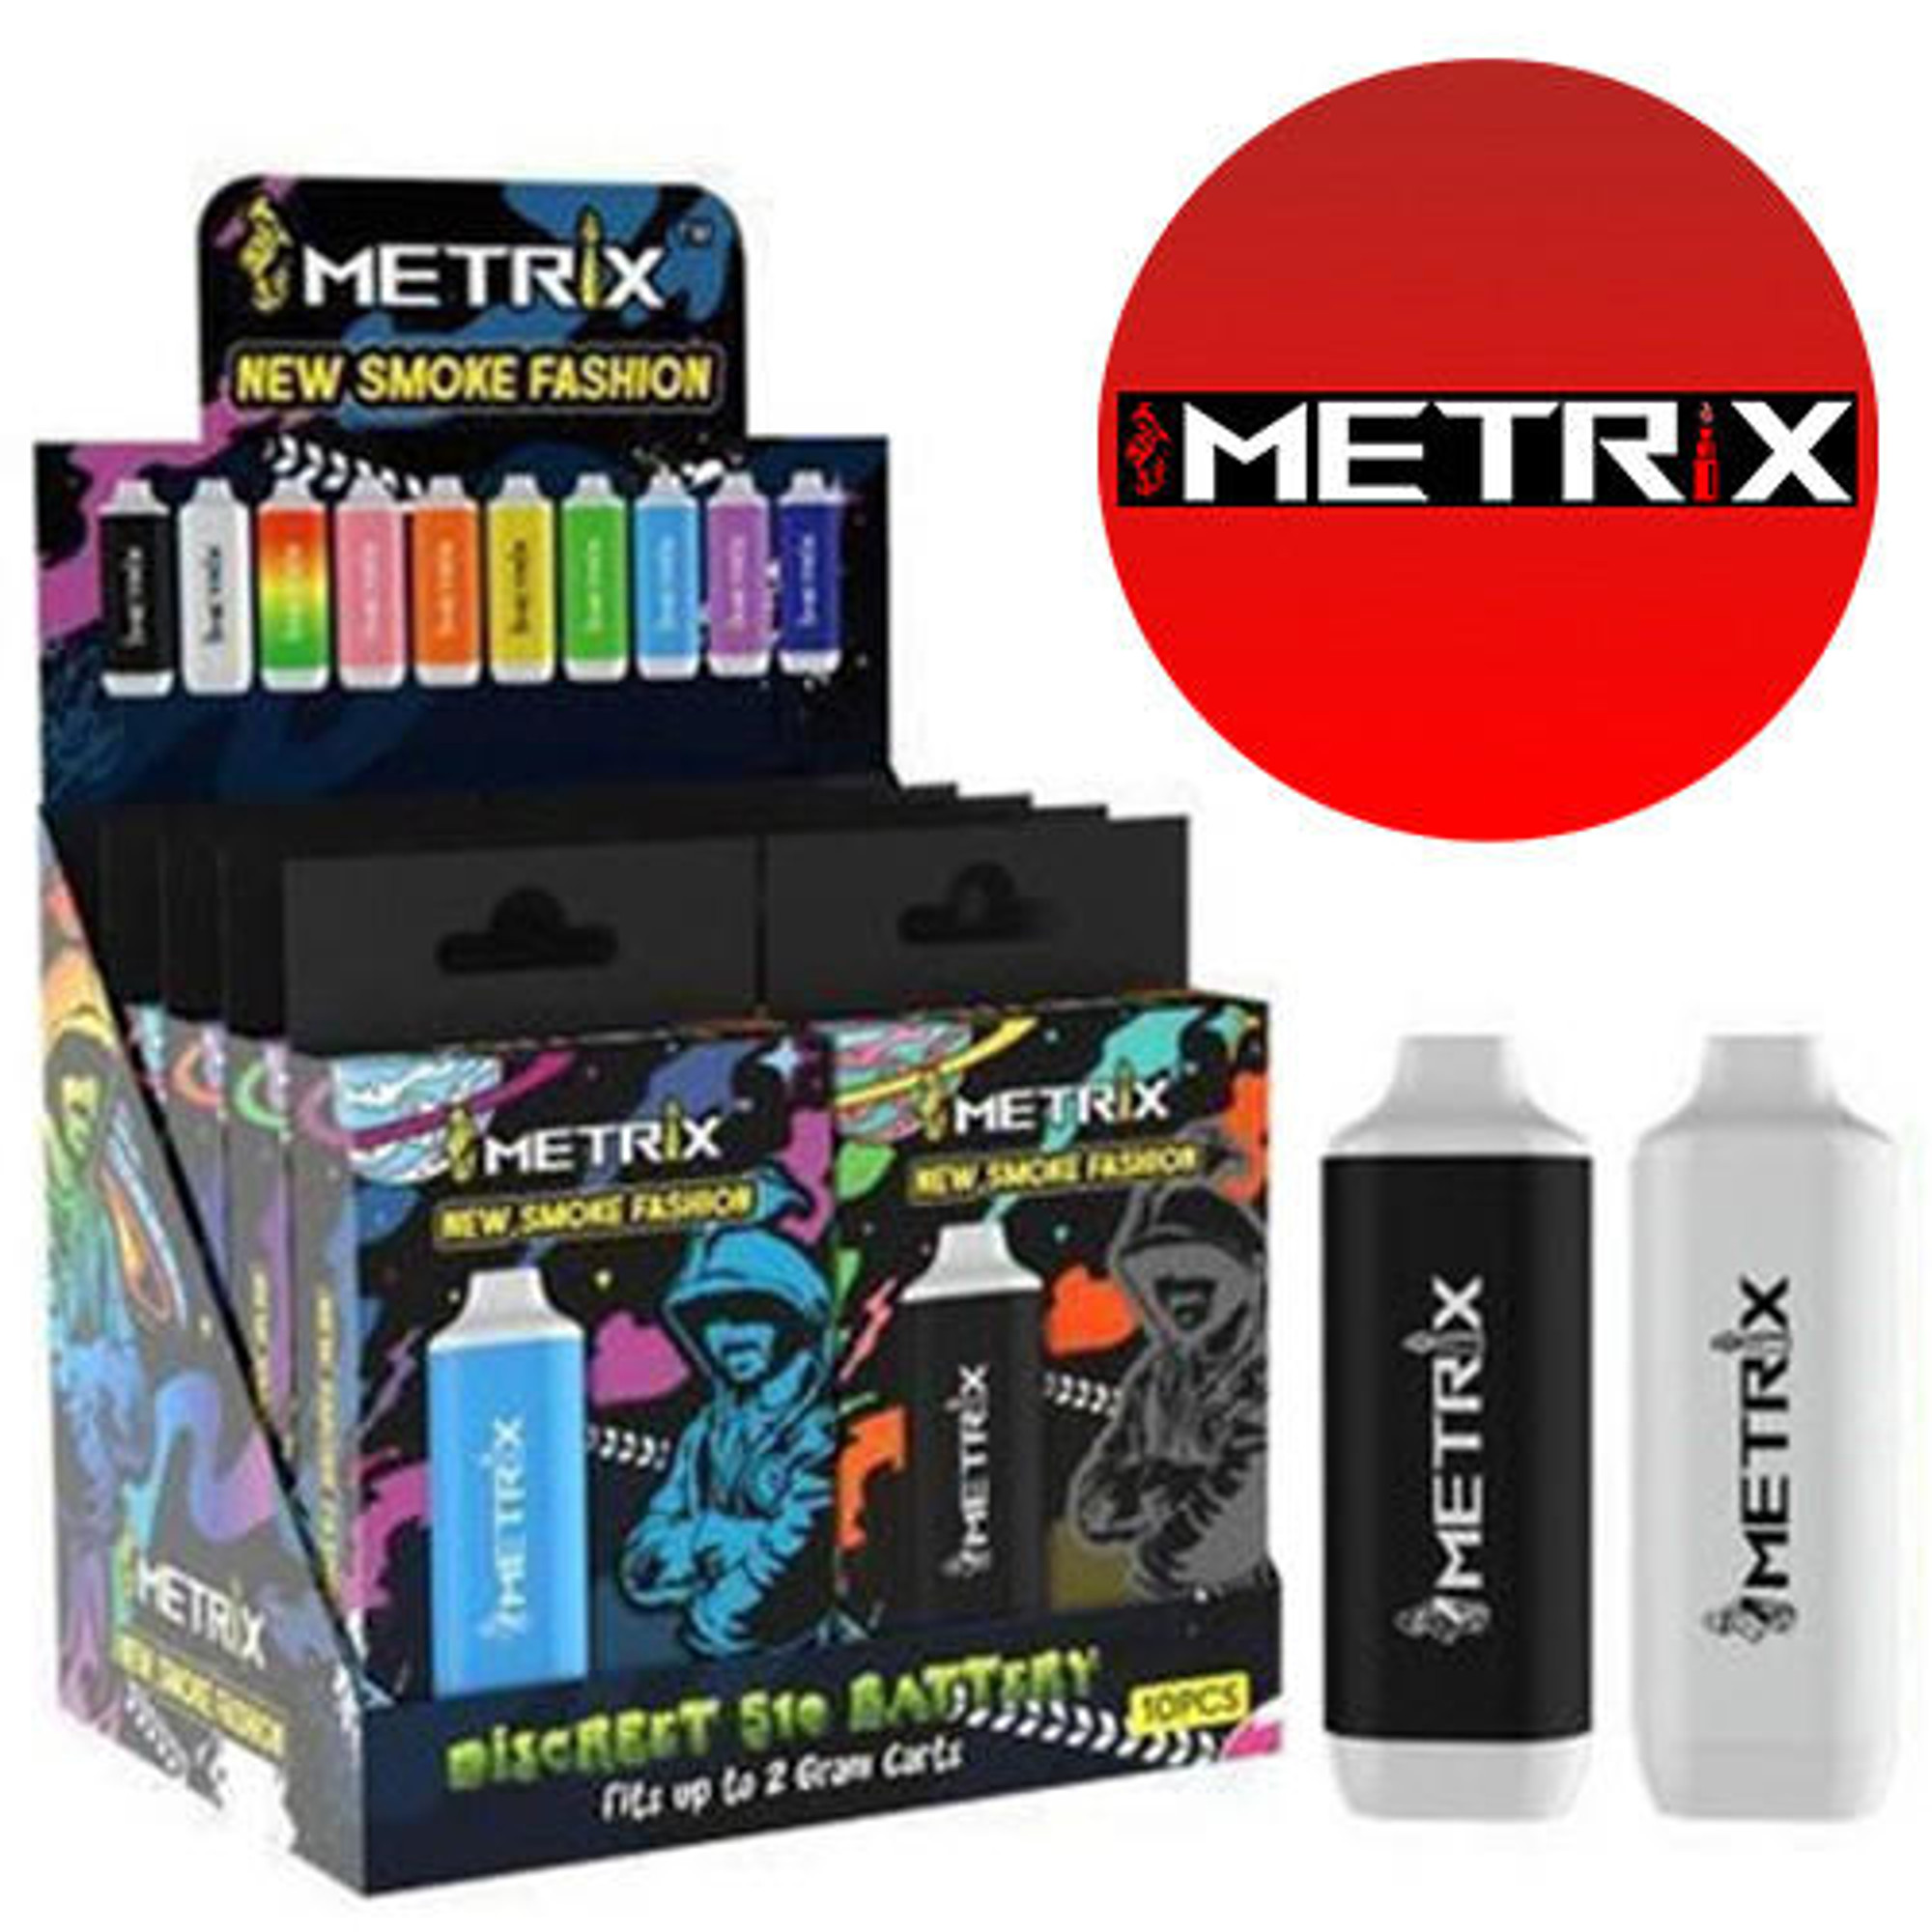 METRIX NEW SMOKE FASHION 510 MIXED COLOR BATTERY DISPLAY 10CT